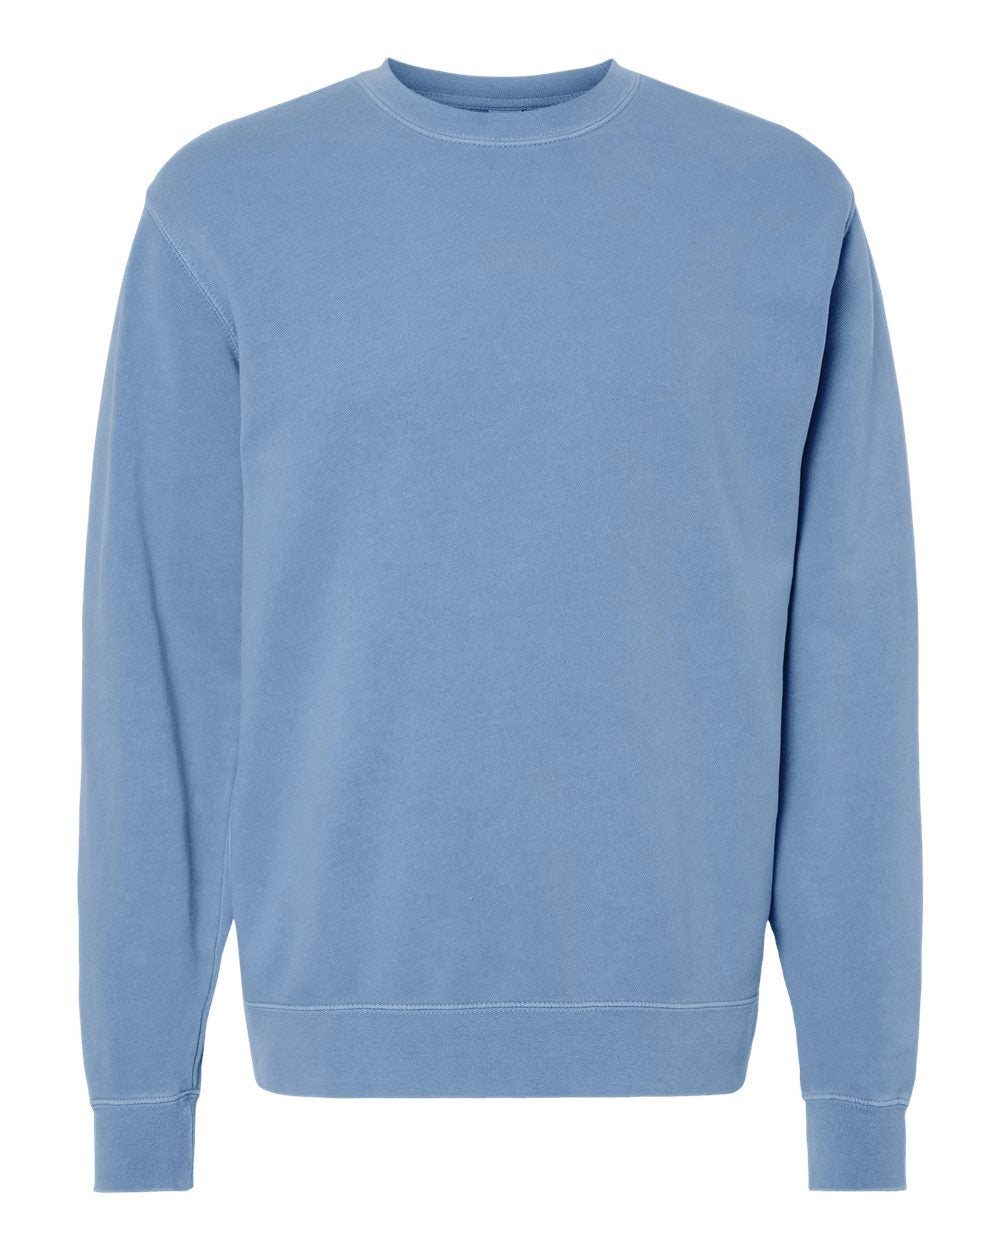 Independent Pigment-Dyed Crewneck Sweatshirt (PRM3500) in Pigment Light Blue